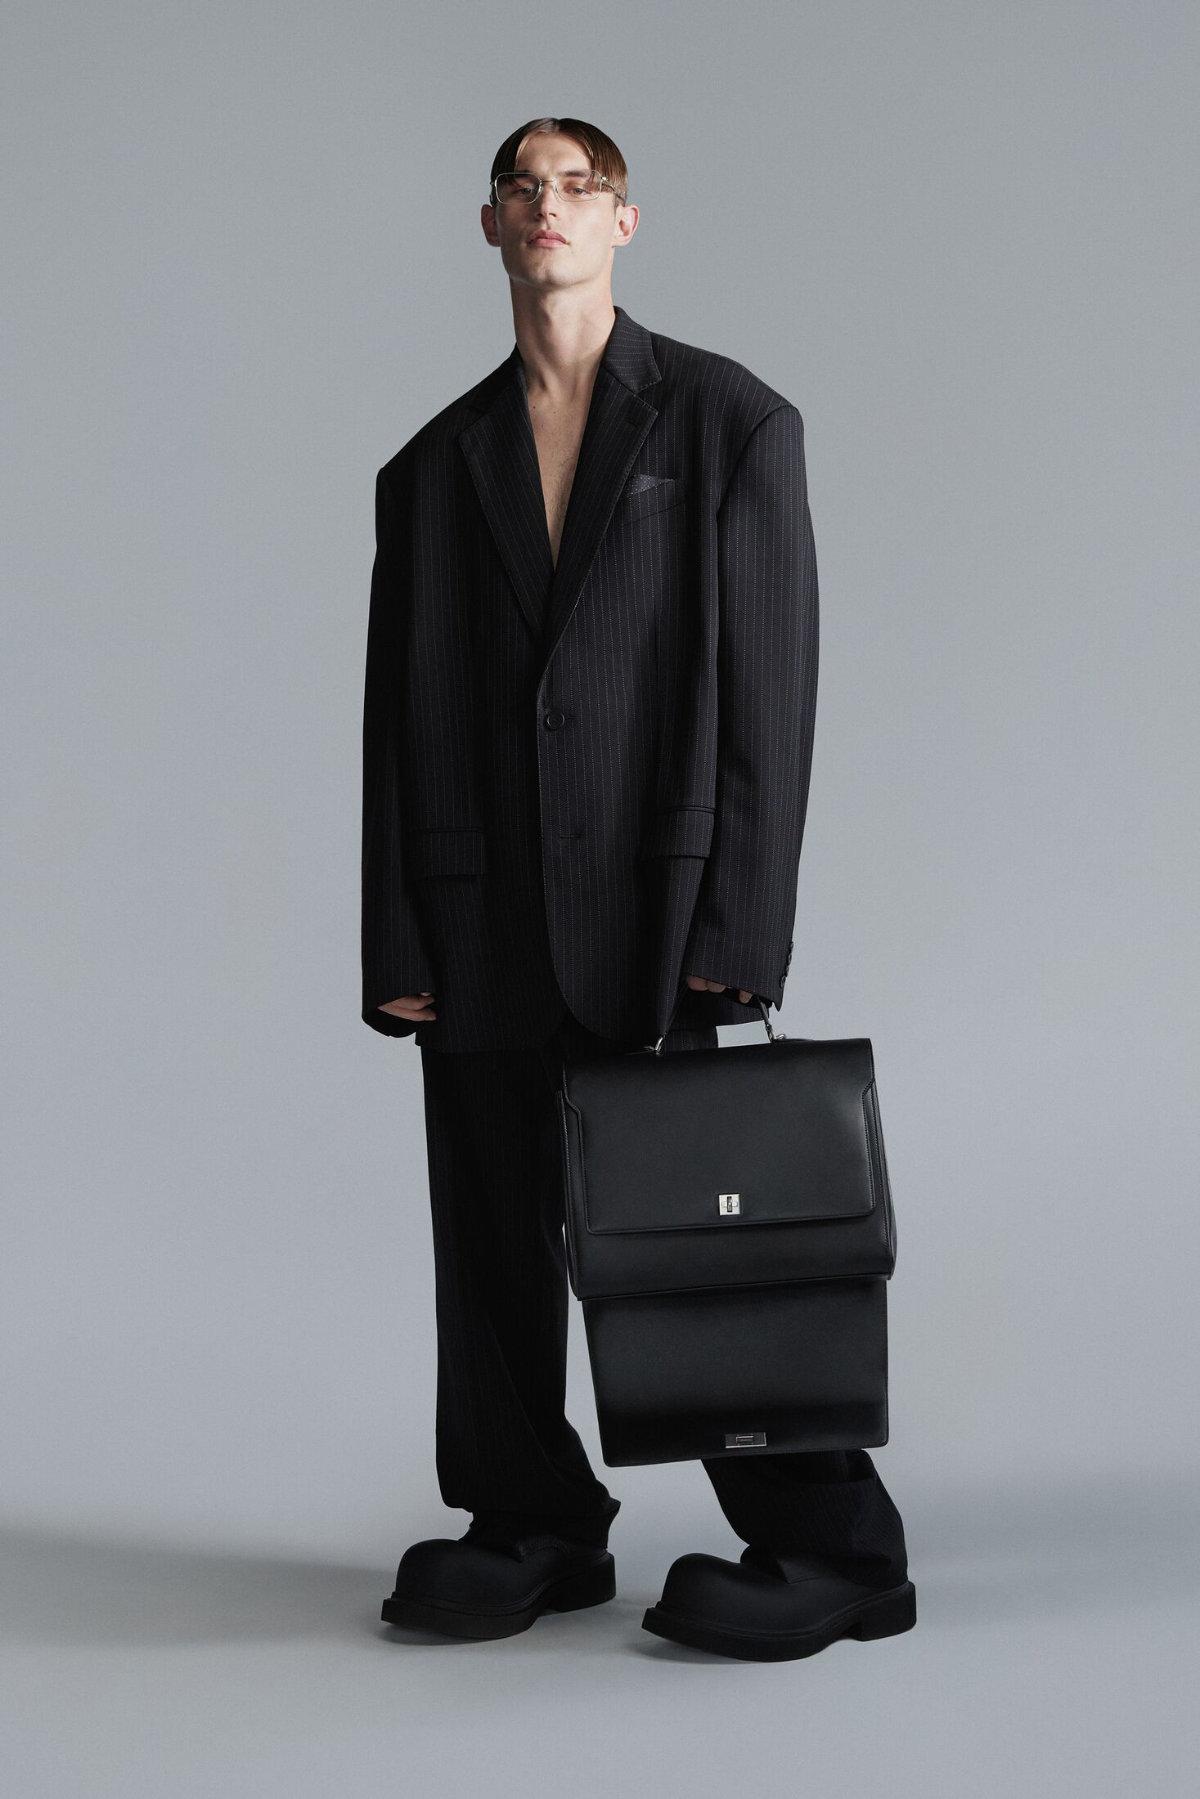 Balenciaga Presents Its New Garde-Robe 23 Campaign